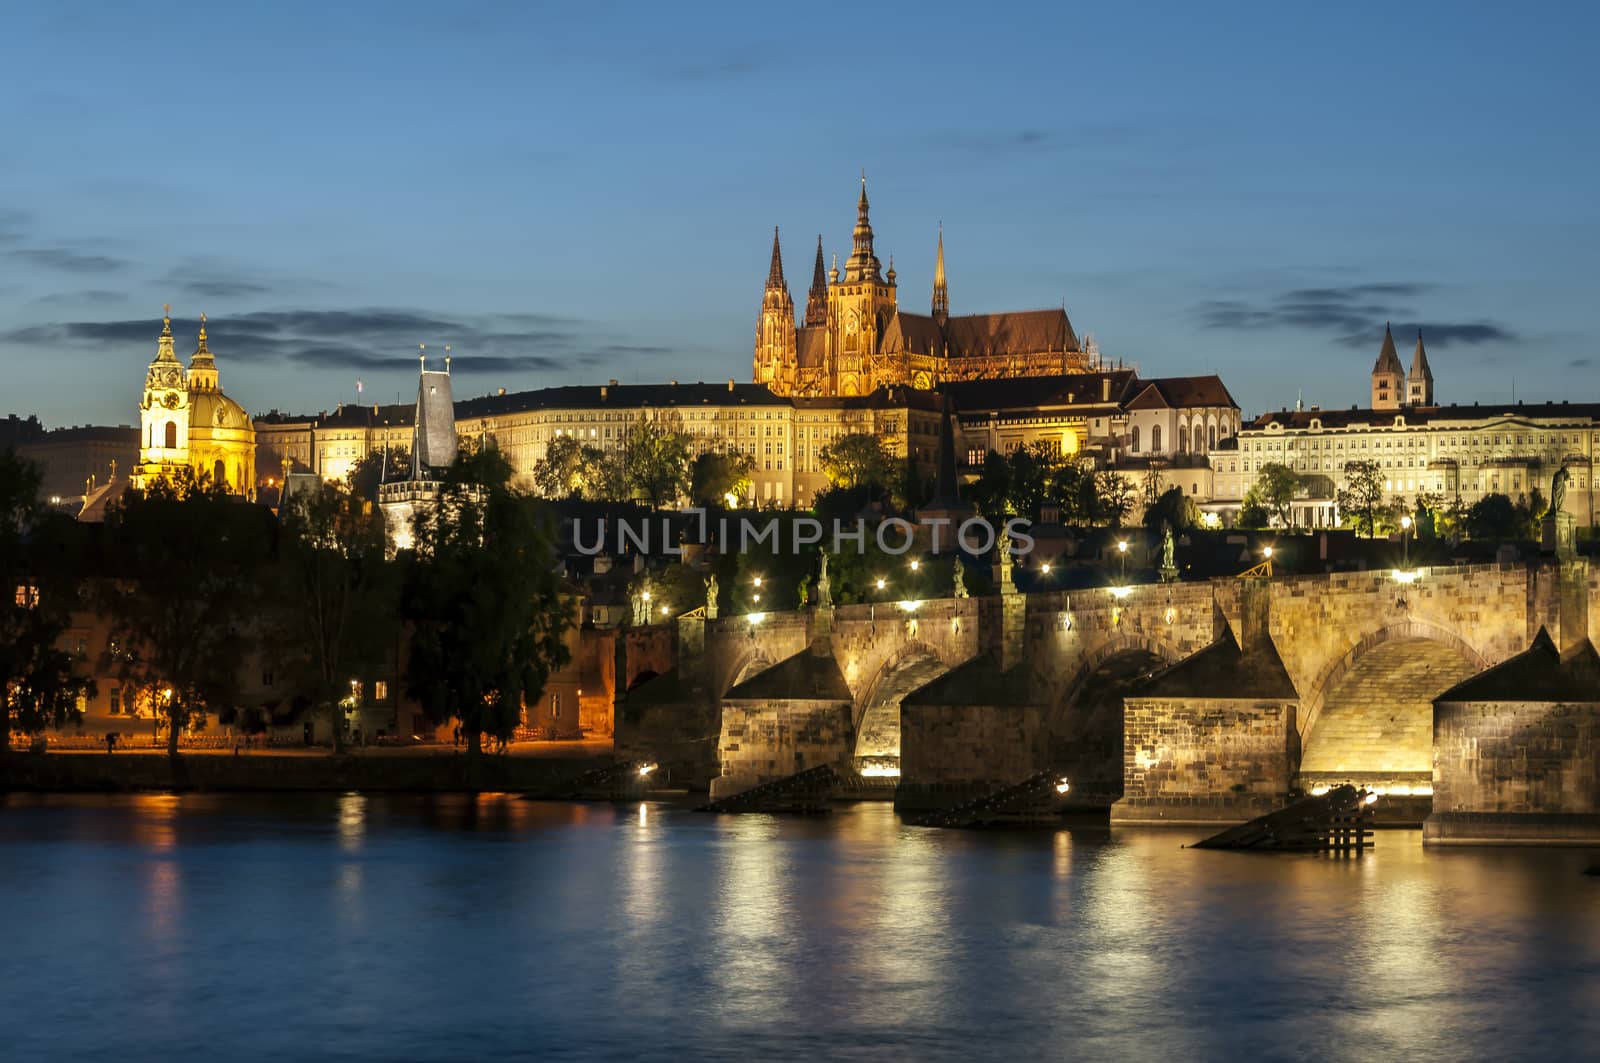 St. Vitus Cathedral and Charles bridge at night, Prague, Czech Republic.